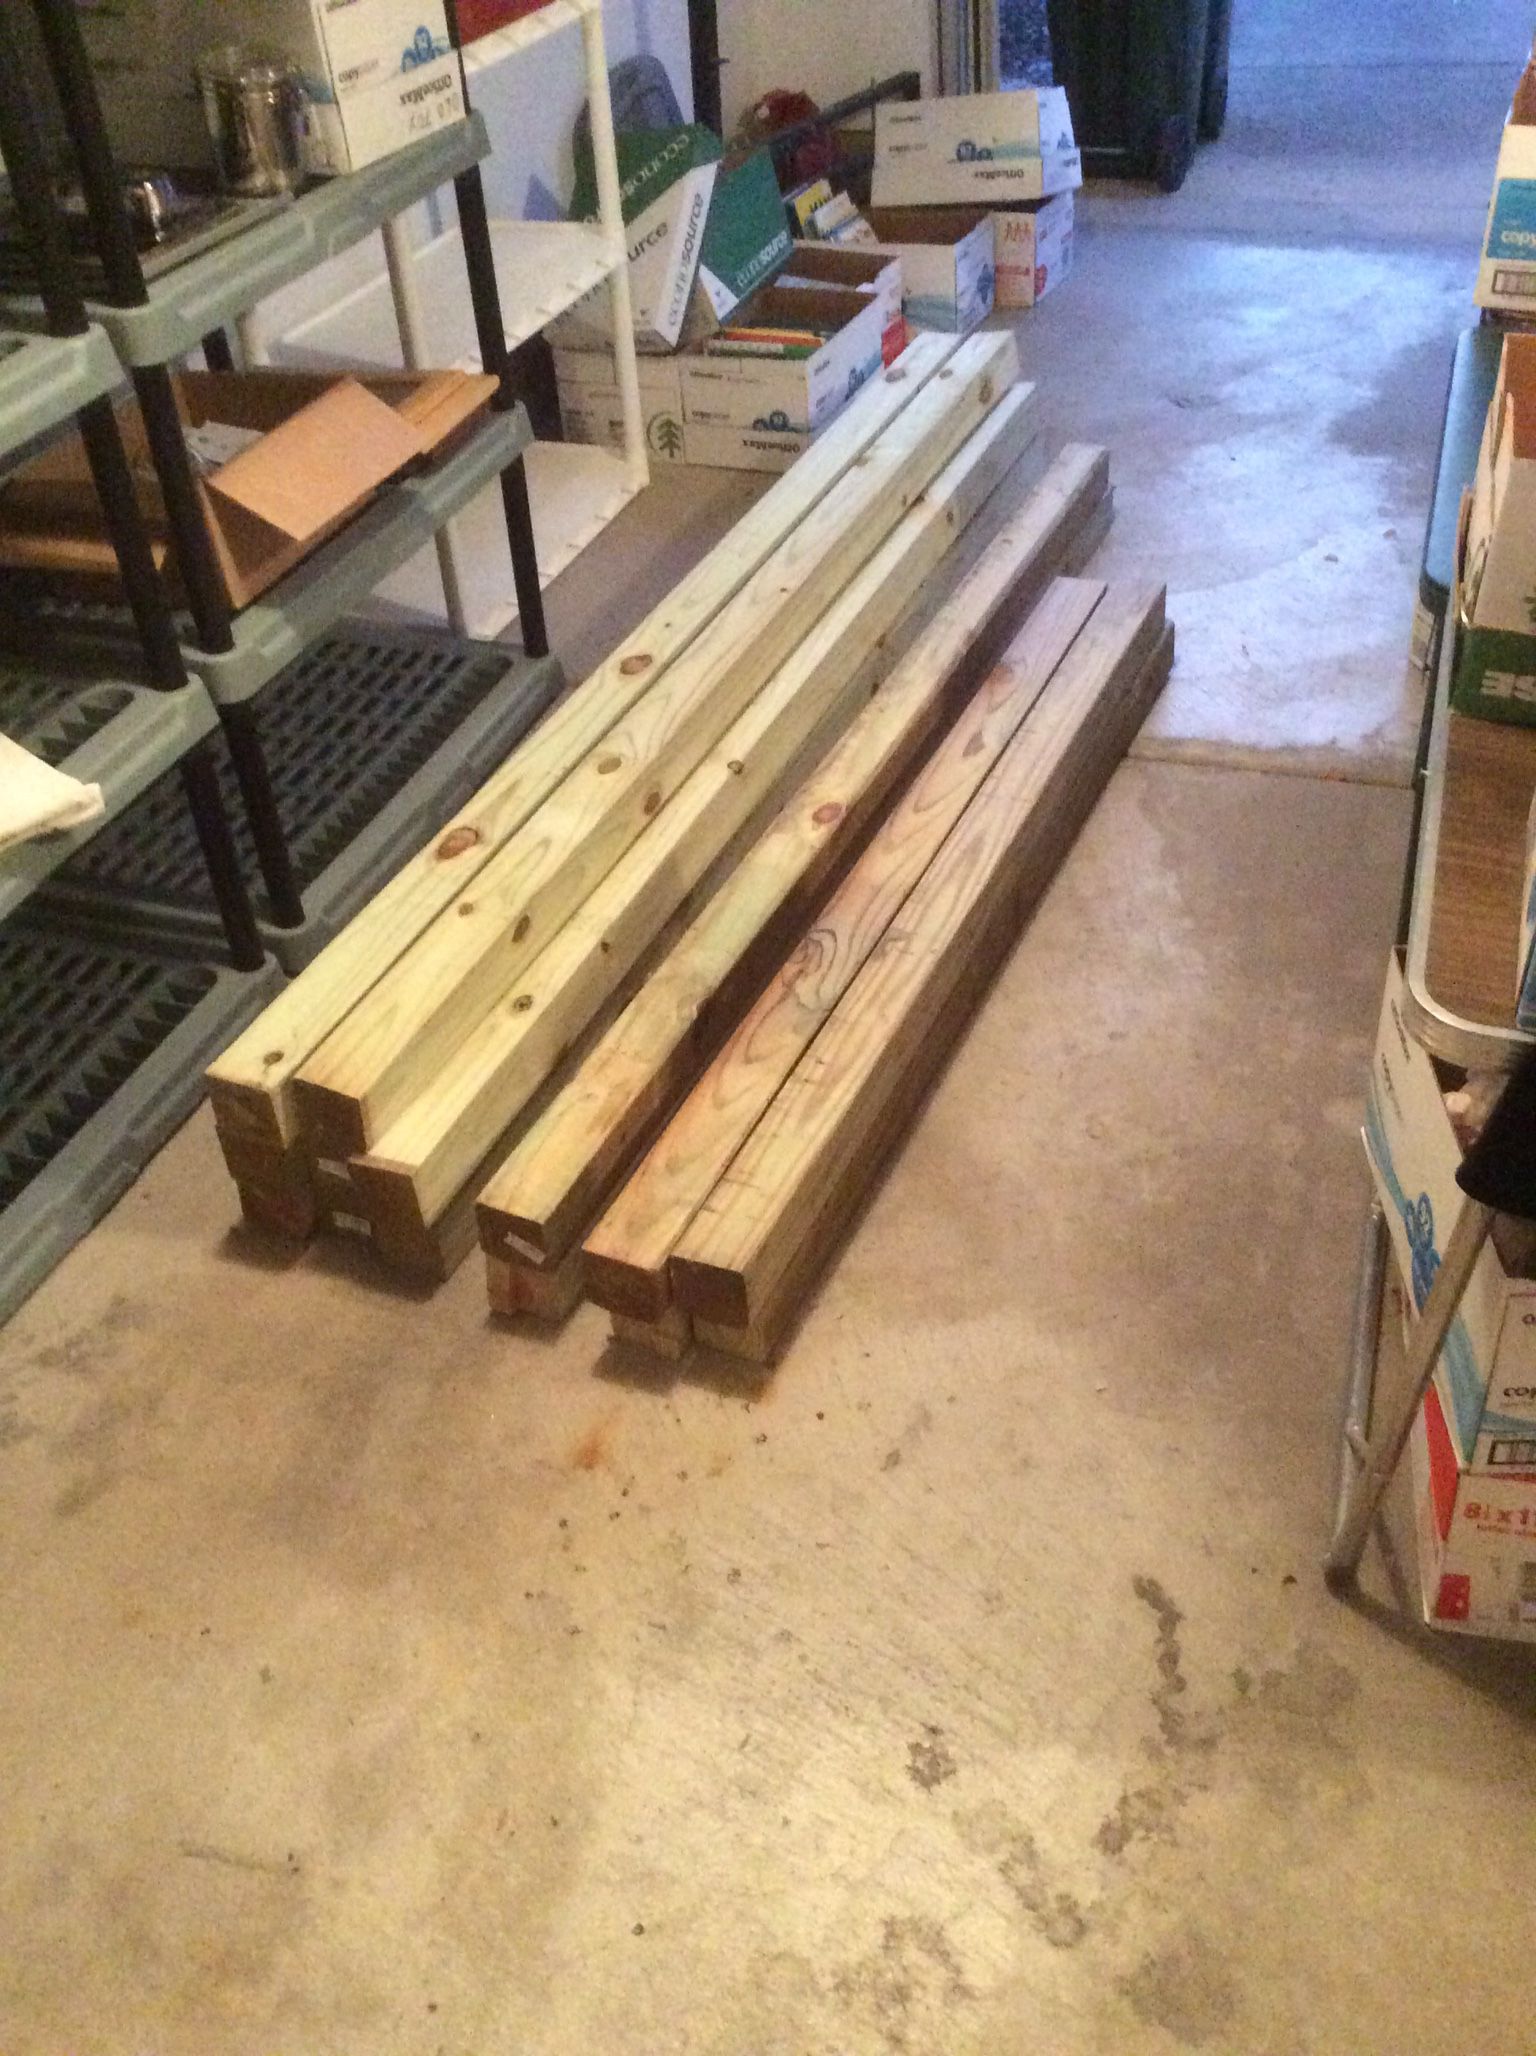 New Lumber - Length Varies